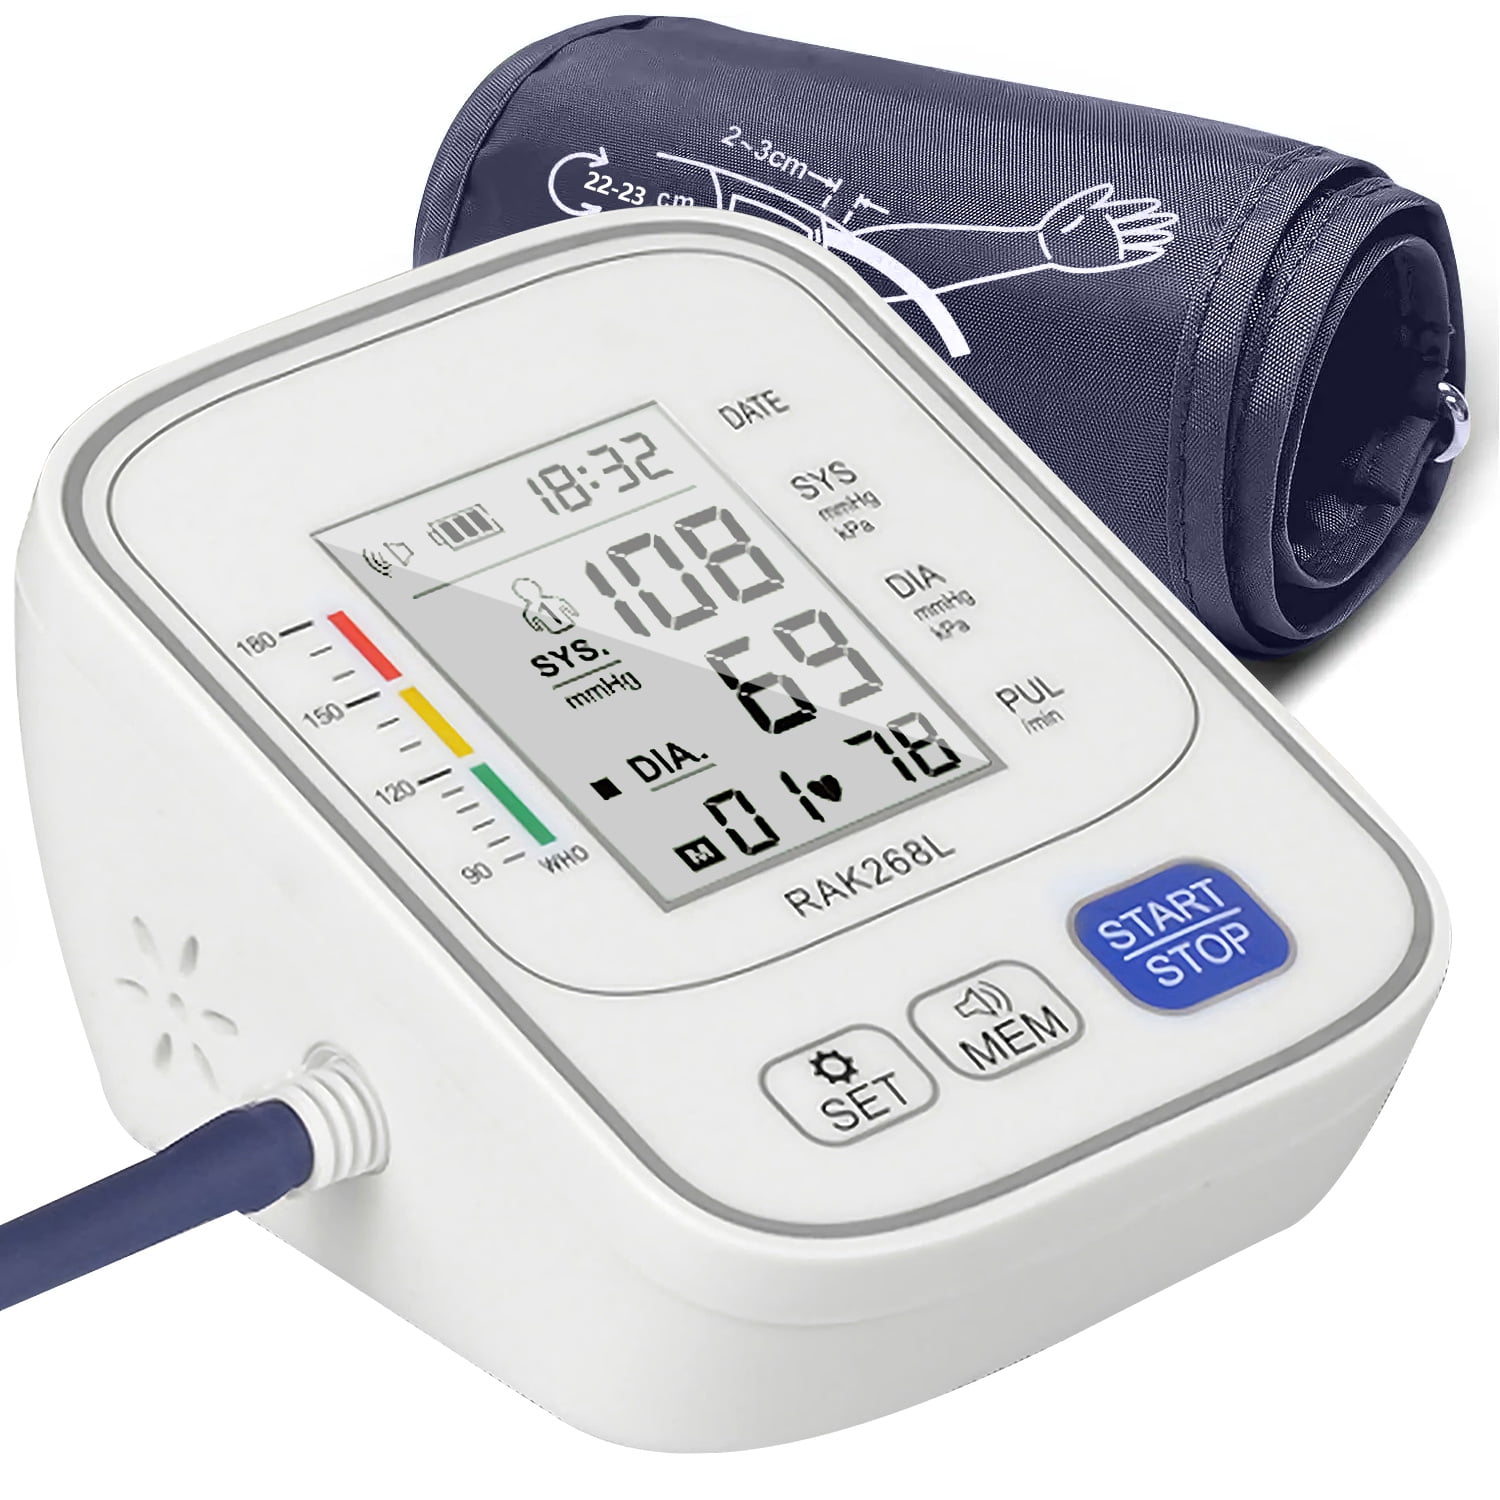 Are Home Blood Pressure Monitors Accurate?